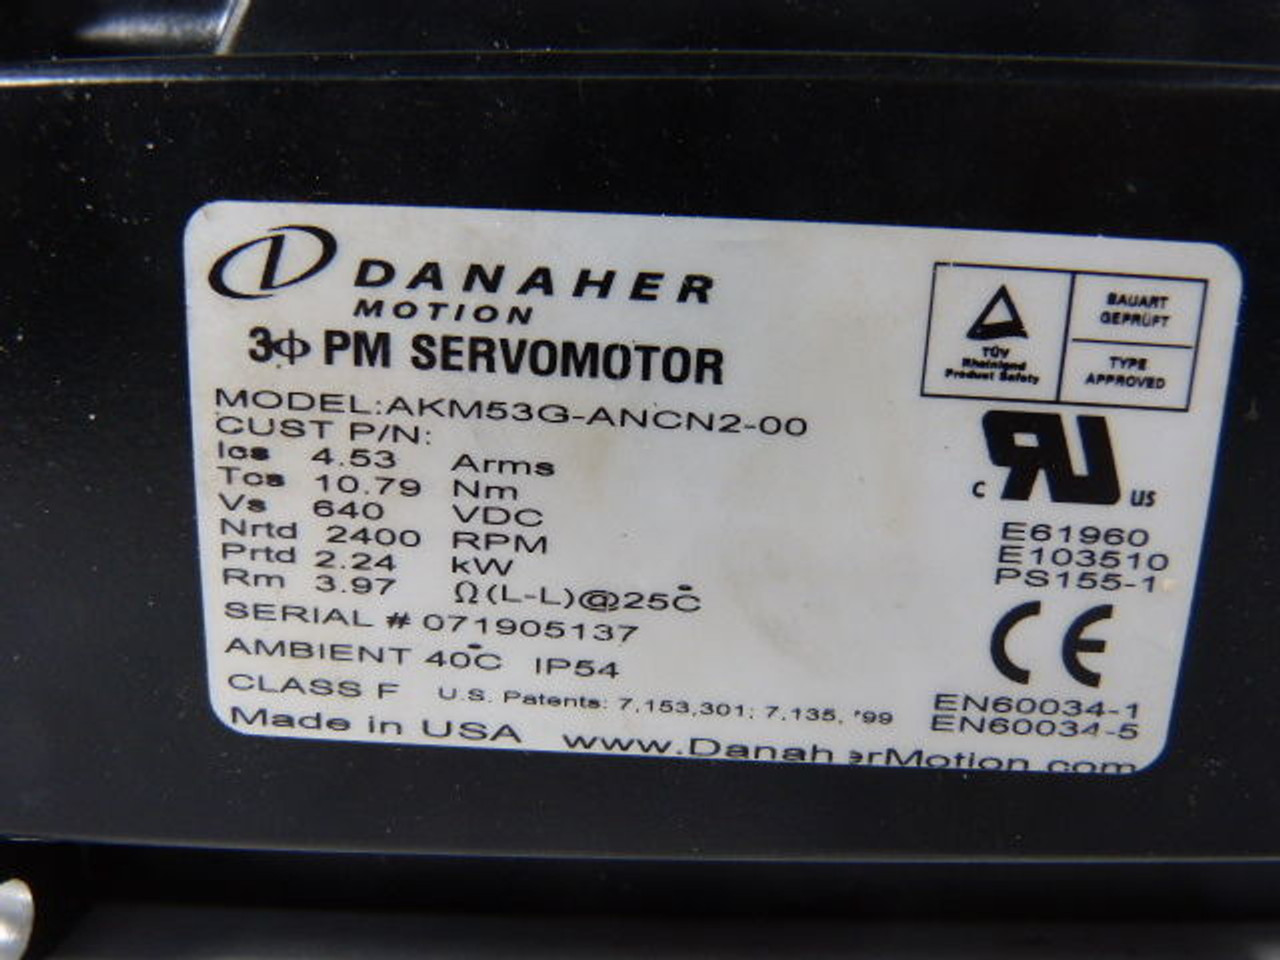 Danaher Servo Motor 2.24kW 2400RPM 640VDC 10.79Nm 4.53A USED